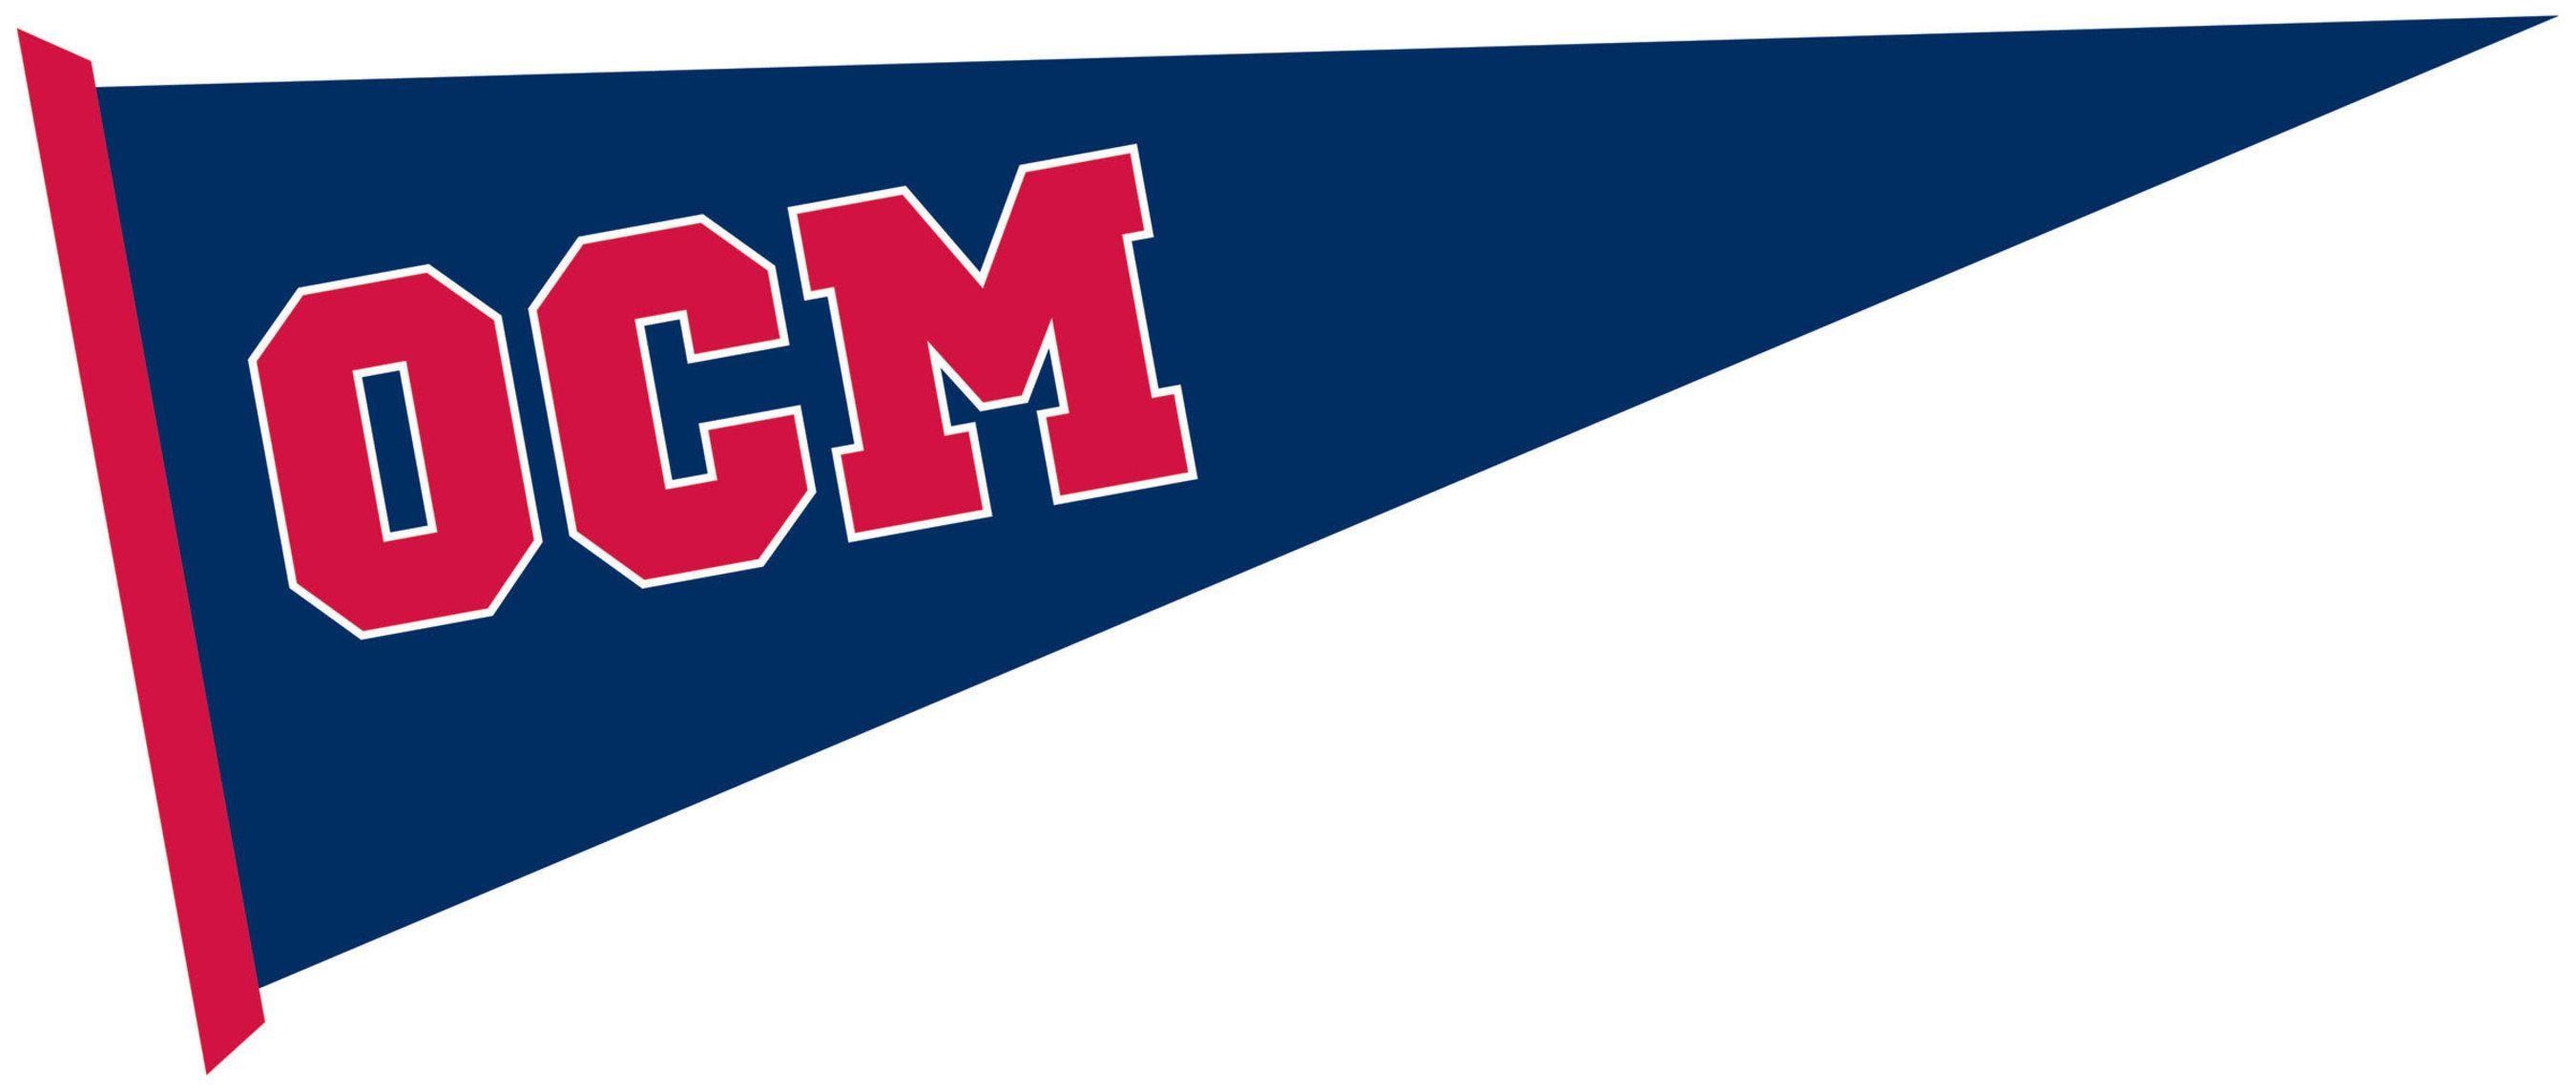 OCM Logo - On Campus Marketing Announces the Launch of OCM.com